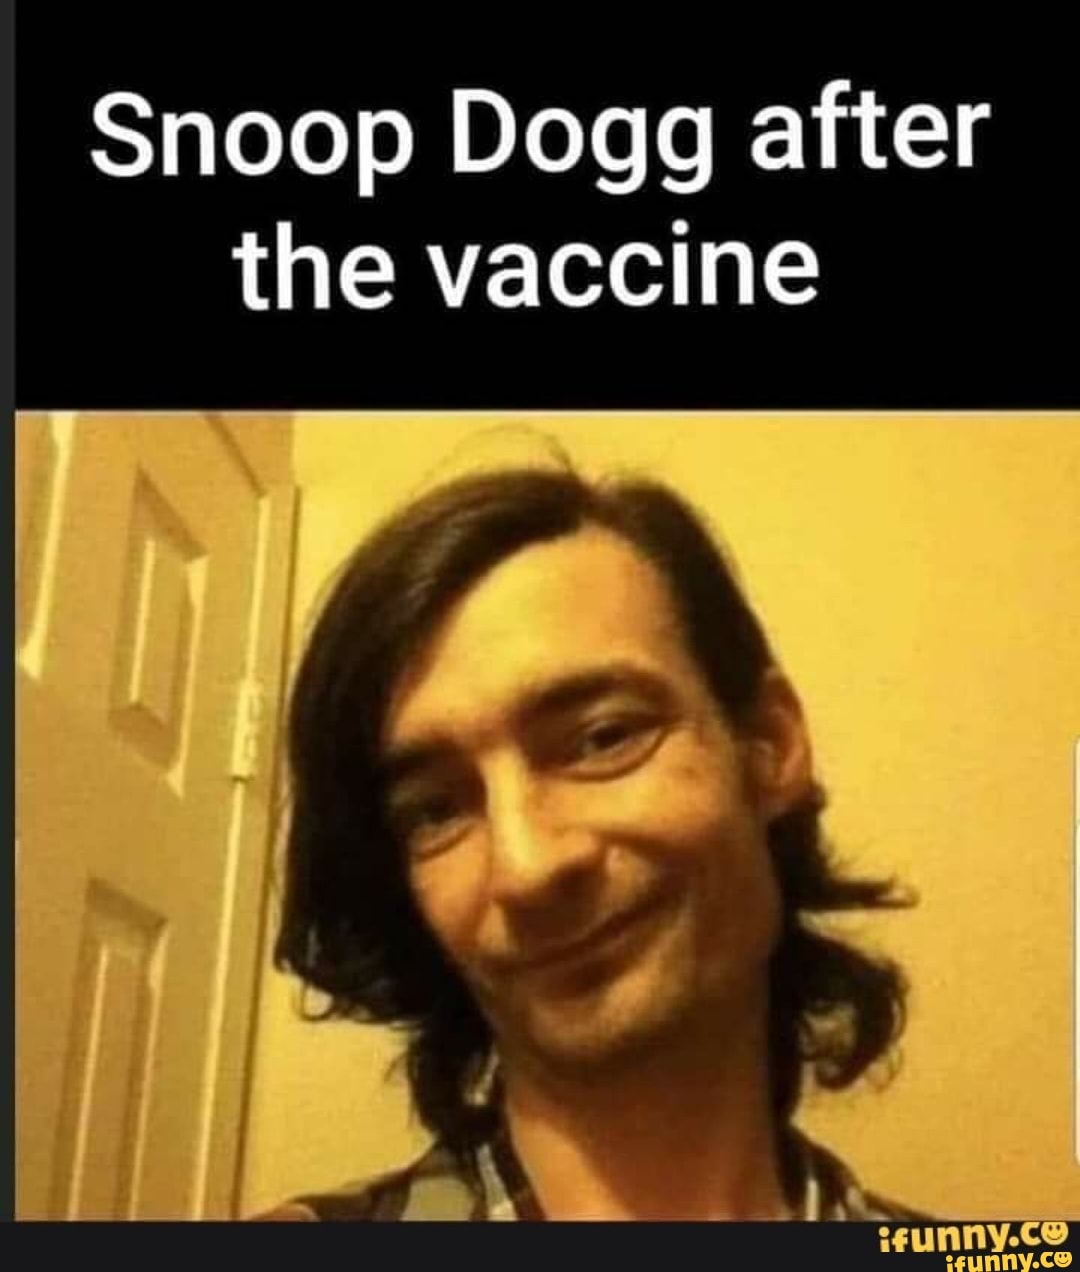 snoop dog meme